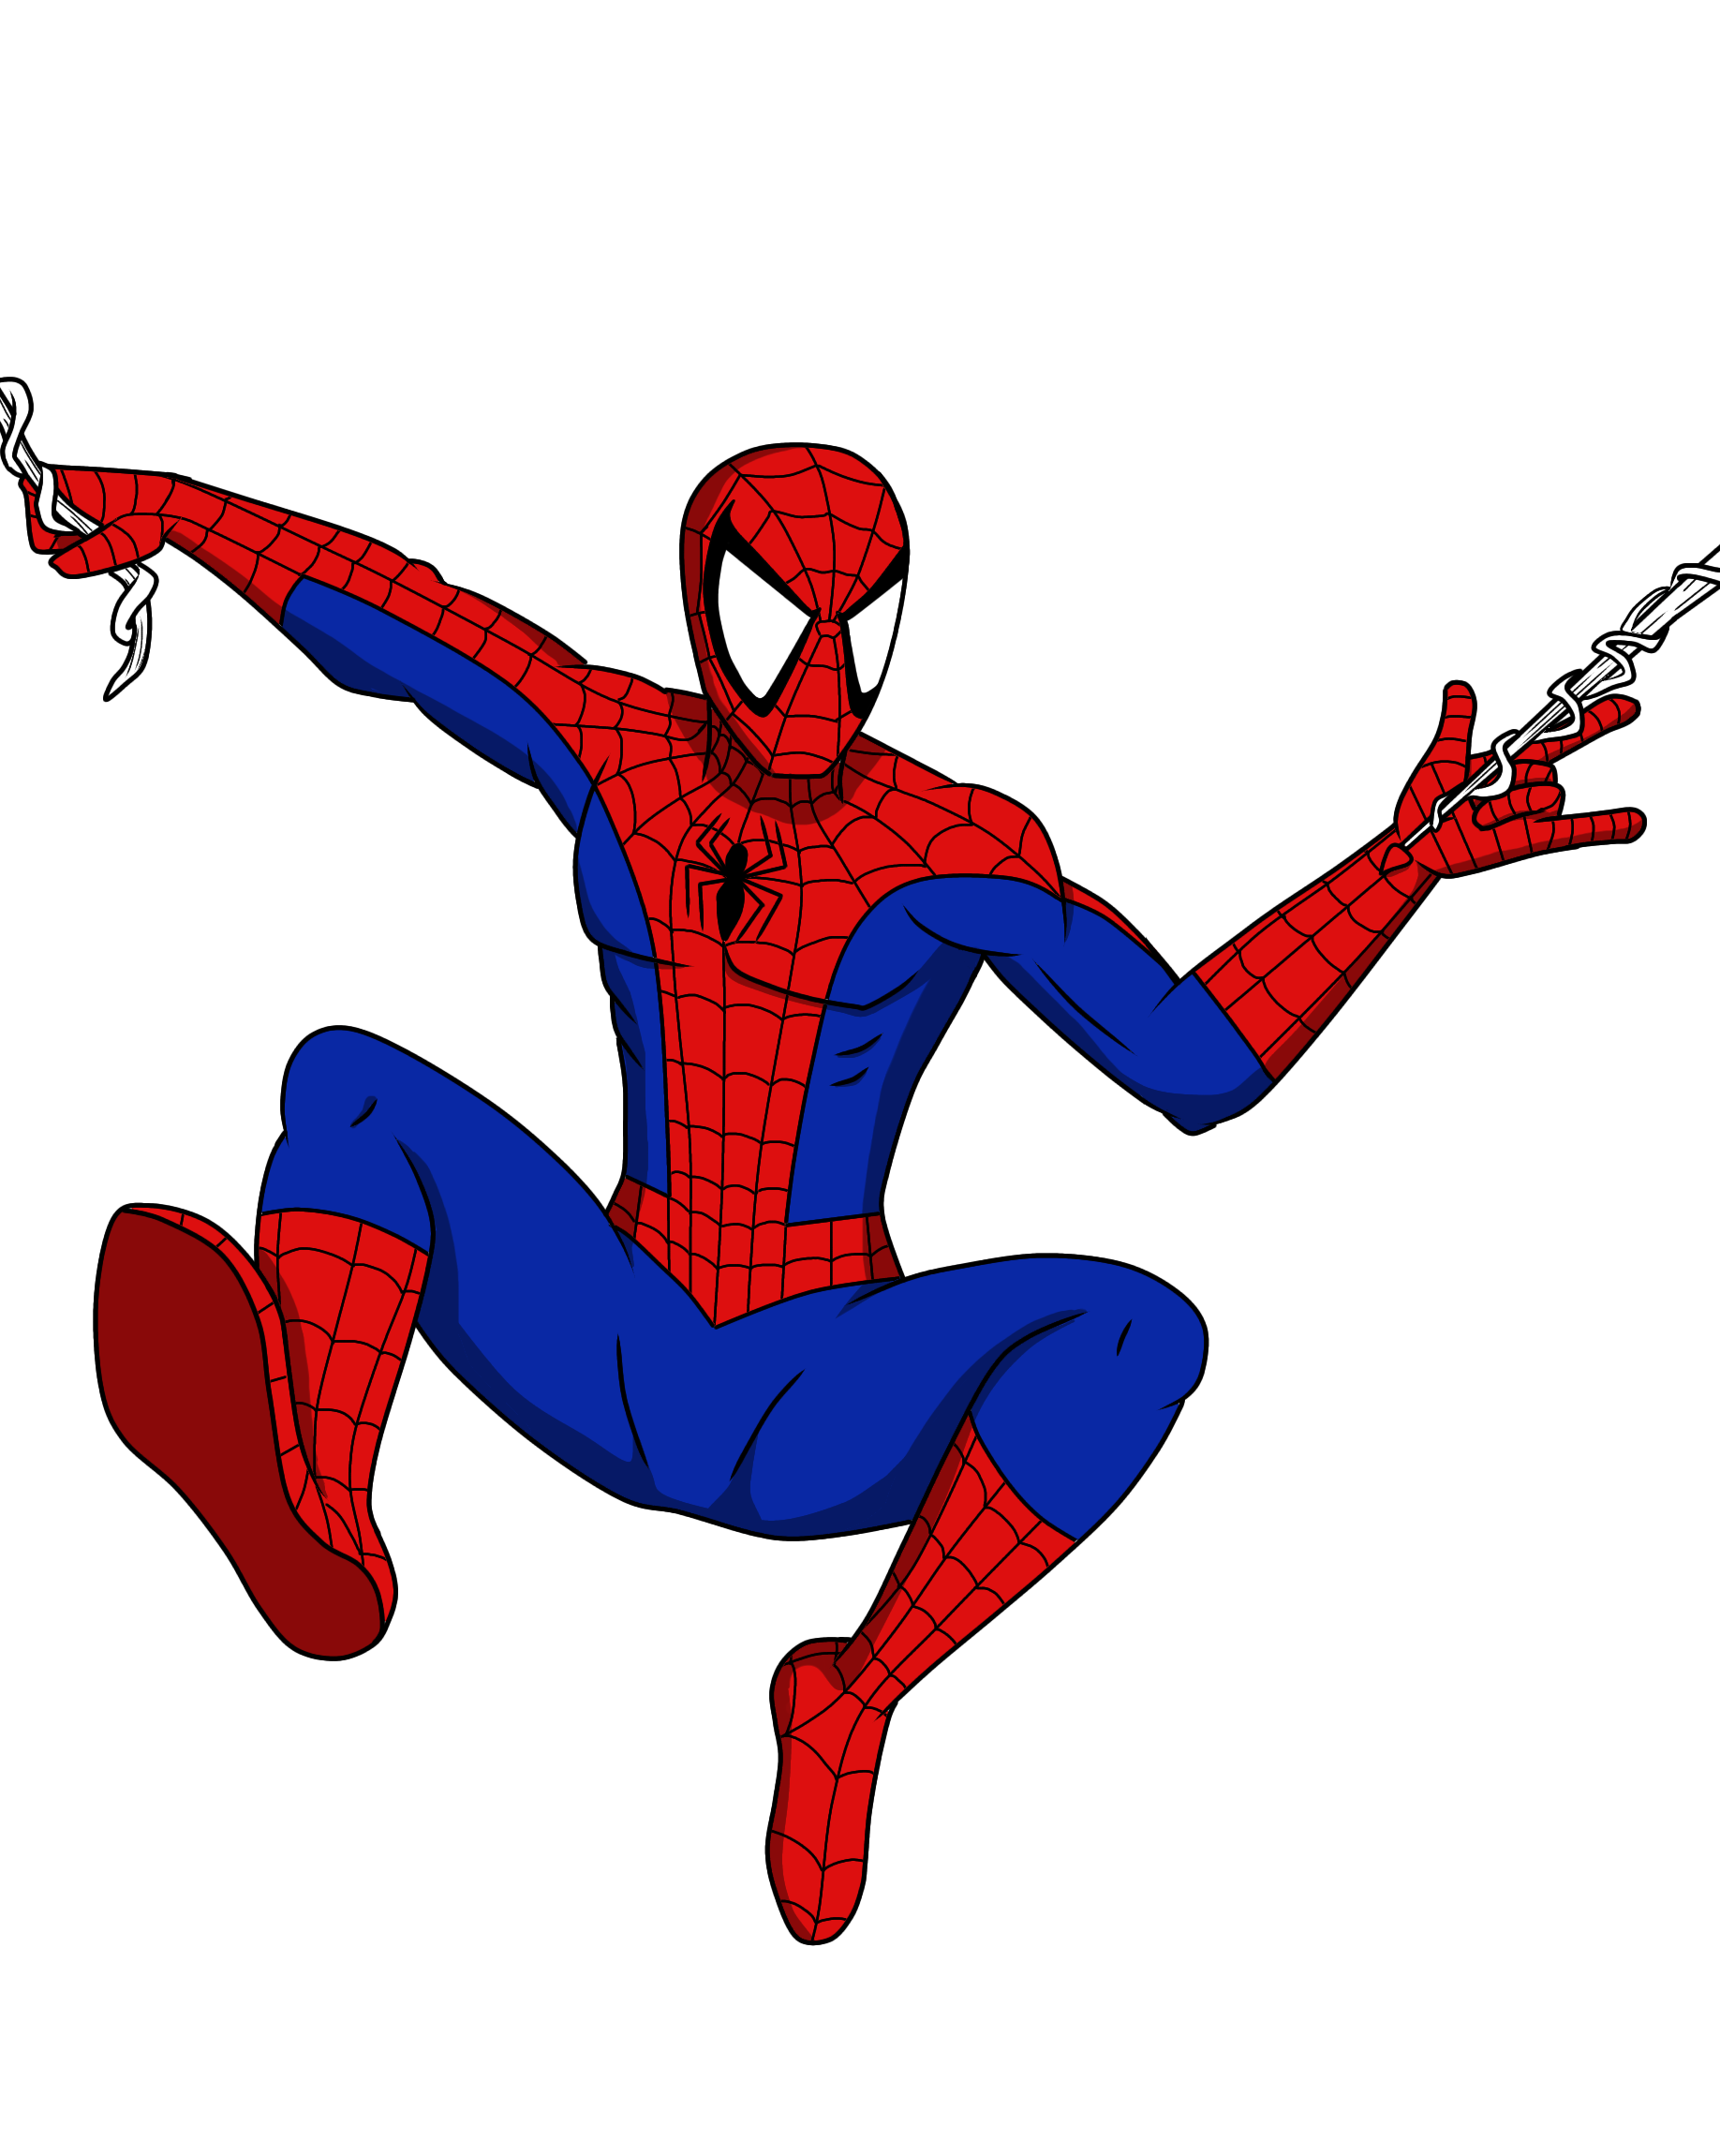 Your Friendly Neighborhood Spider-Man by WumpaWebHead on DeviantArt